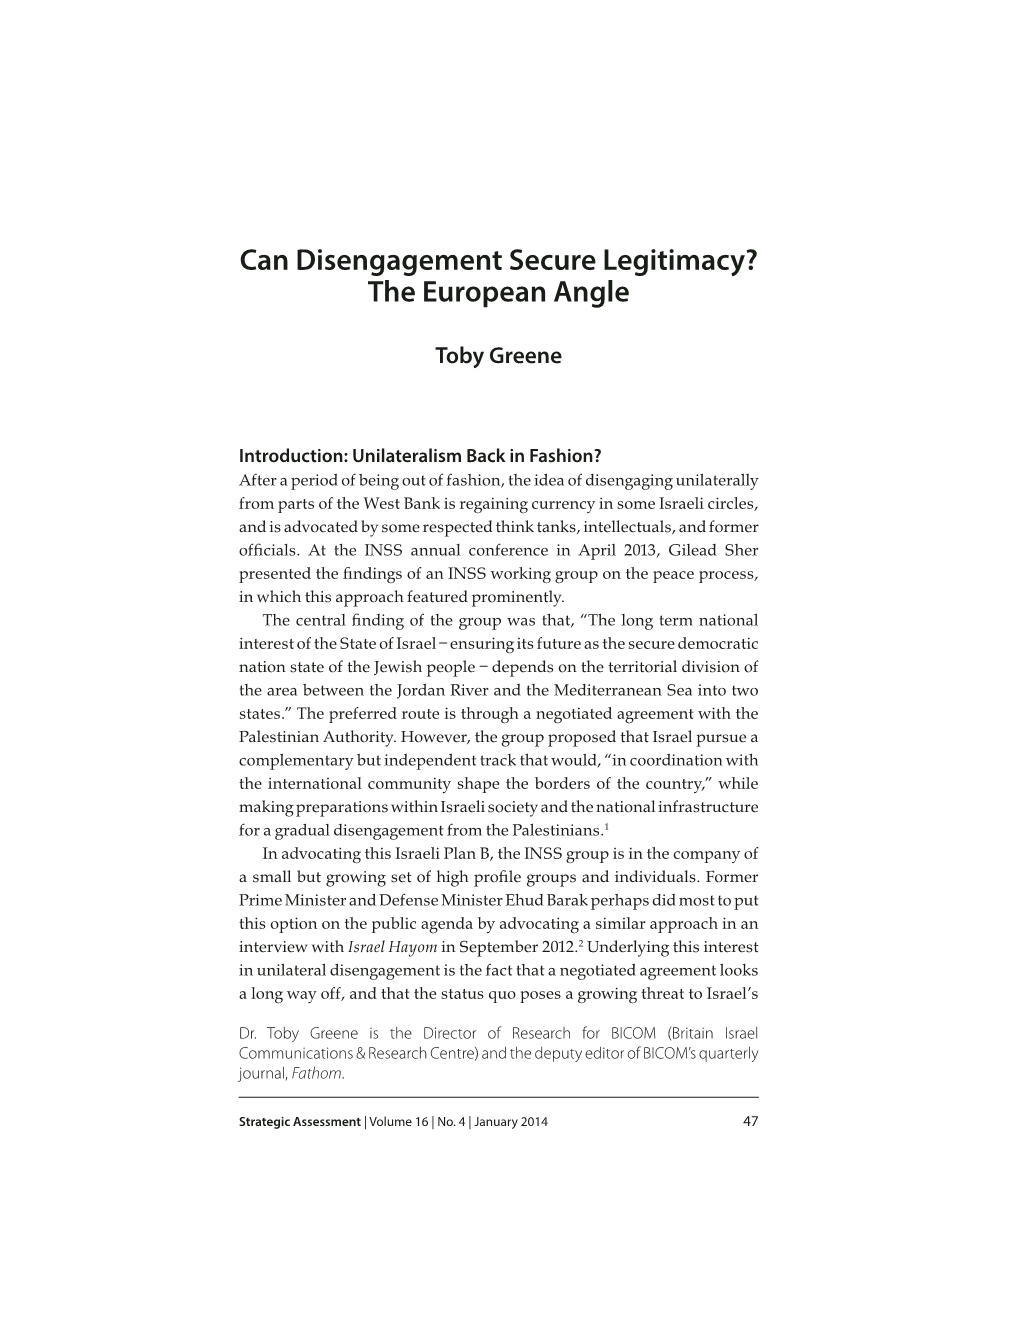 Can Disengagement Secure Legitimacy? the European Angle